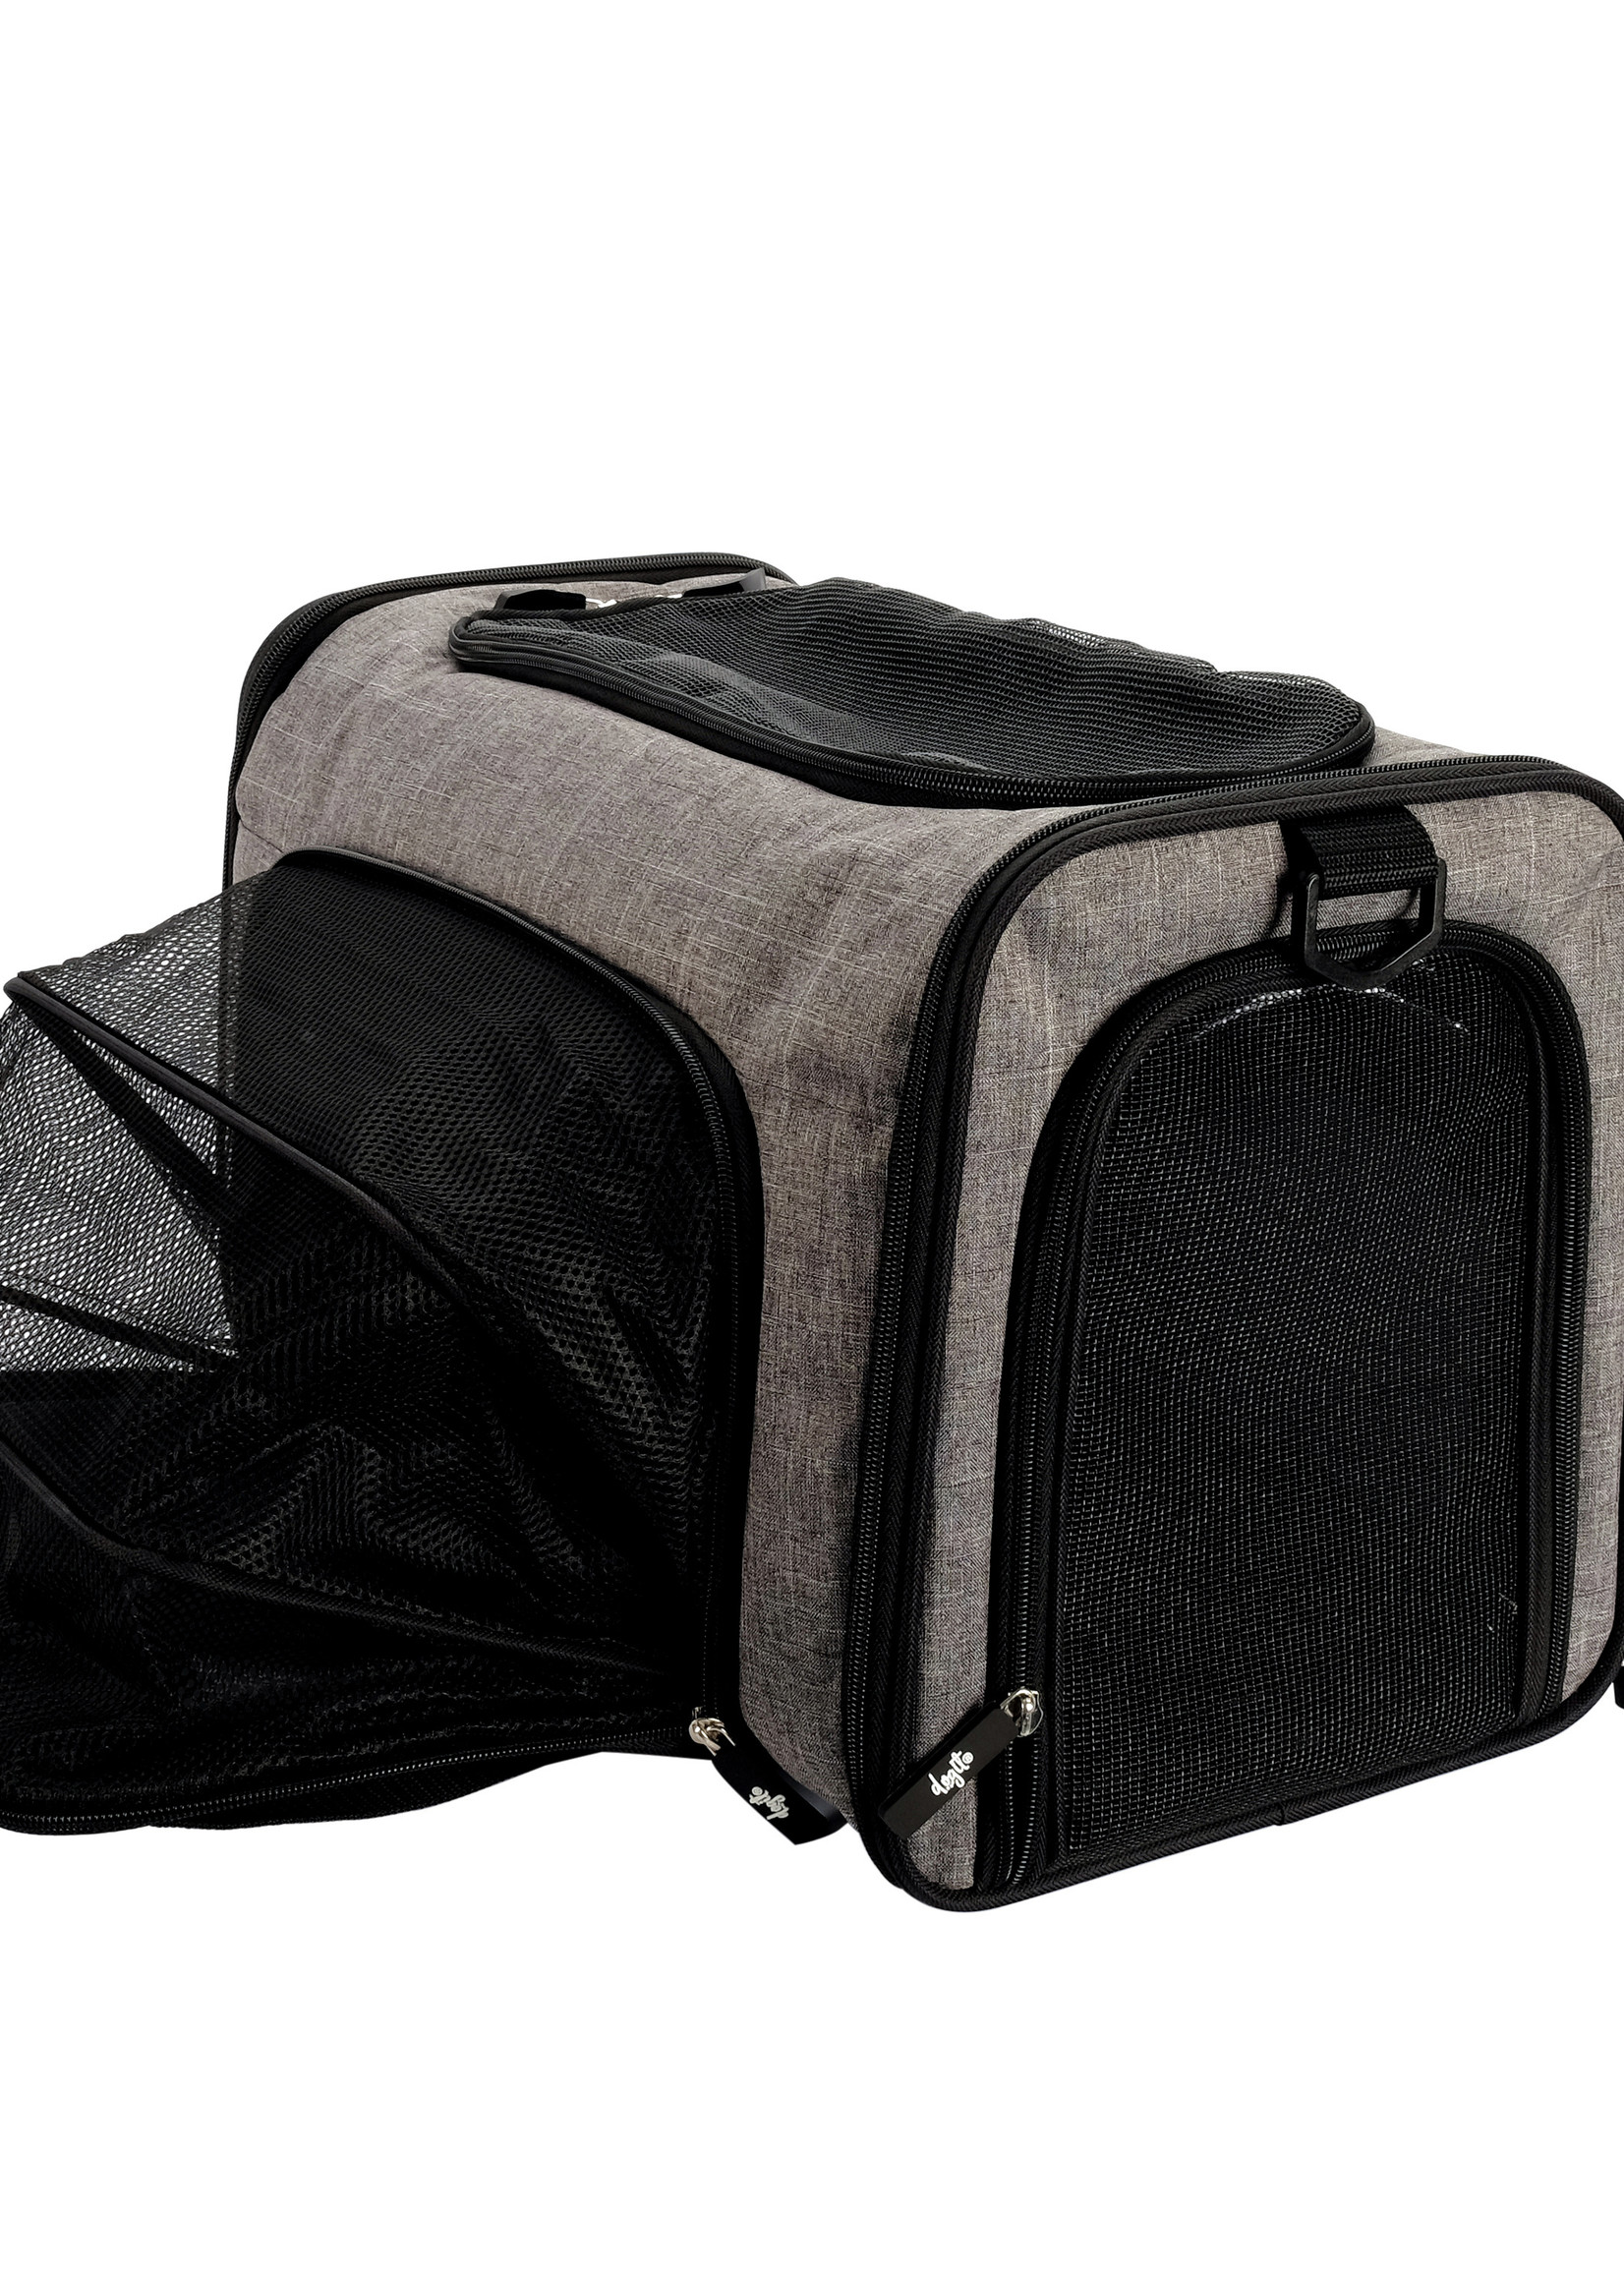 Dogit® Dogit® Explorer Soft Carrier Expandable Carry Bag